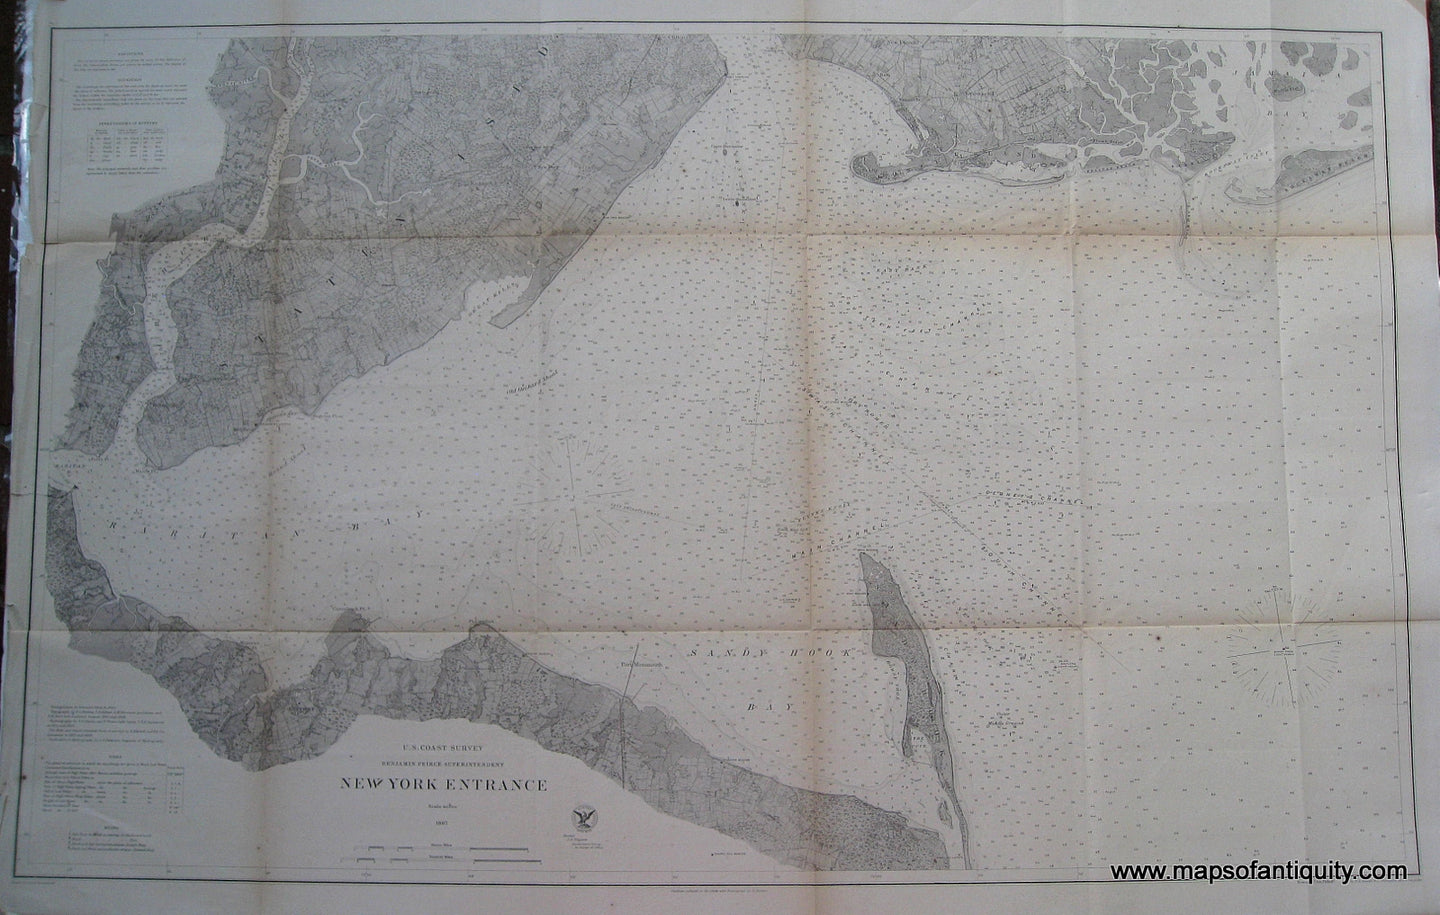 Antique-Nautical-Chart-New-York-Entrance***********-United-States-Northeast-1867-U.S.-Coast-Survey-Maps-Of-Antiquity